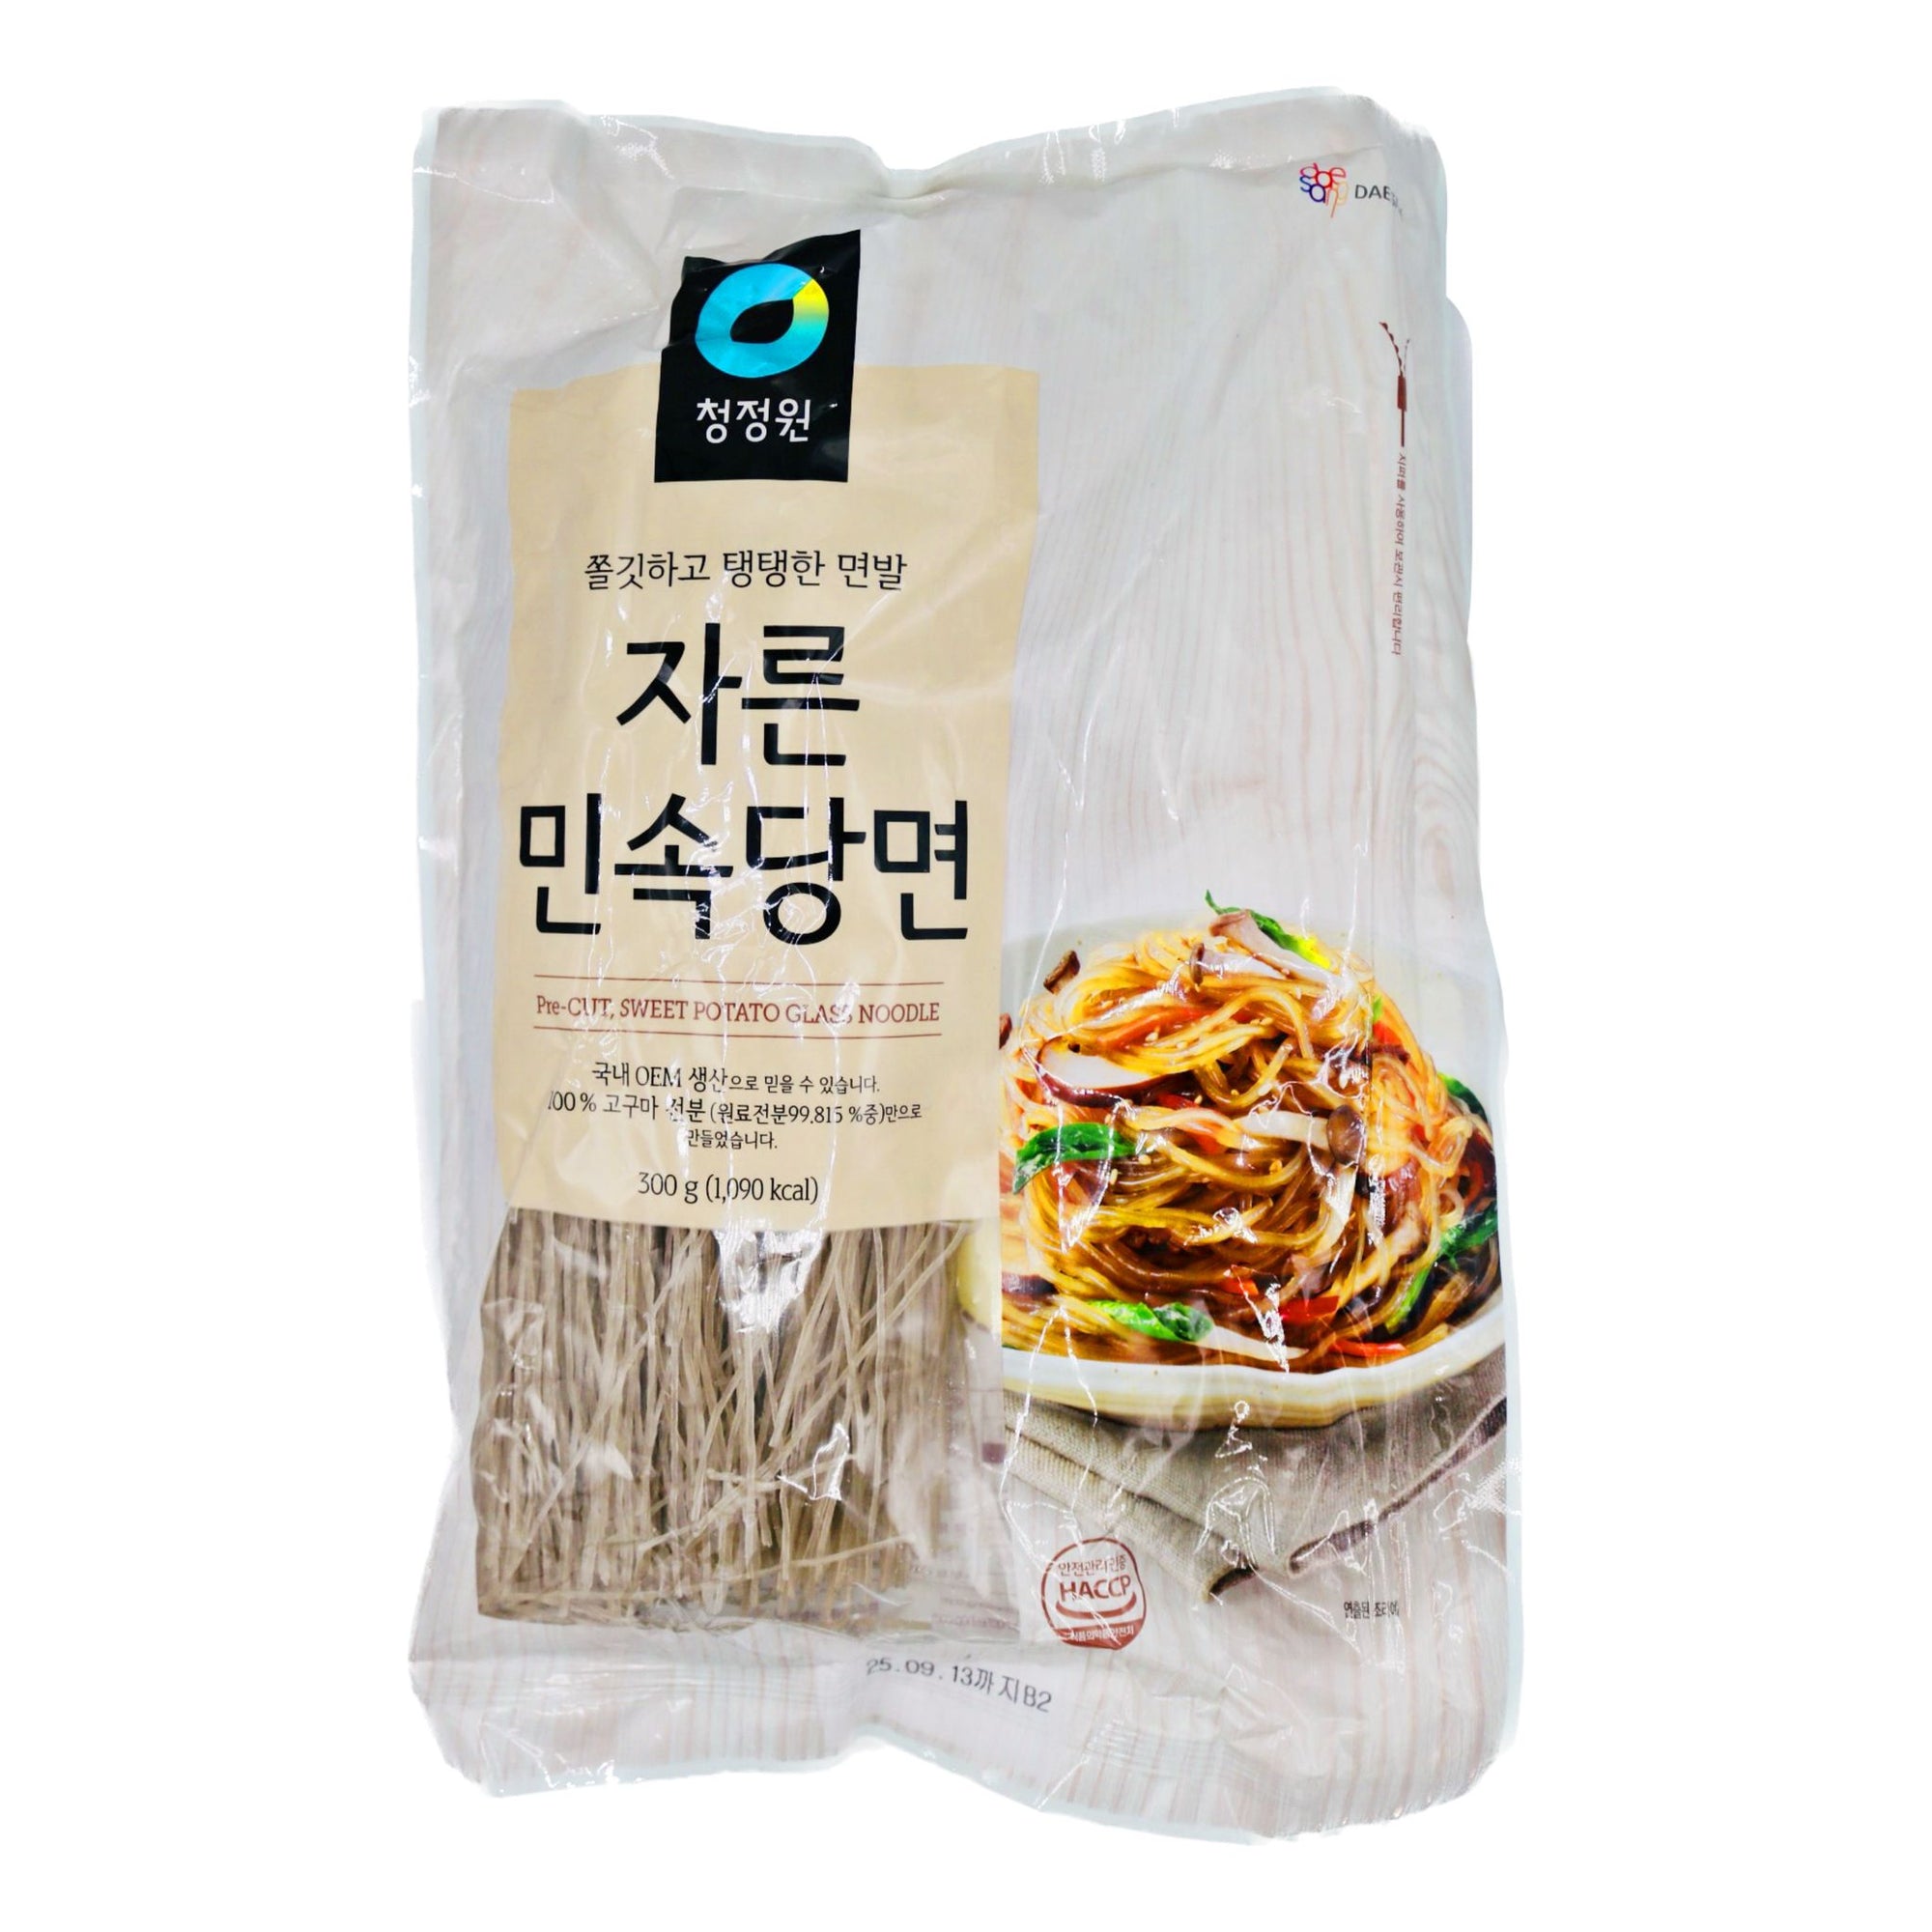 Chung Jung One Pre-Cut Sweet Potato Glass Noodle 300g